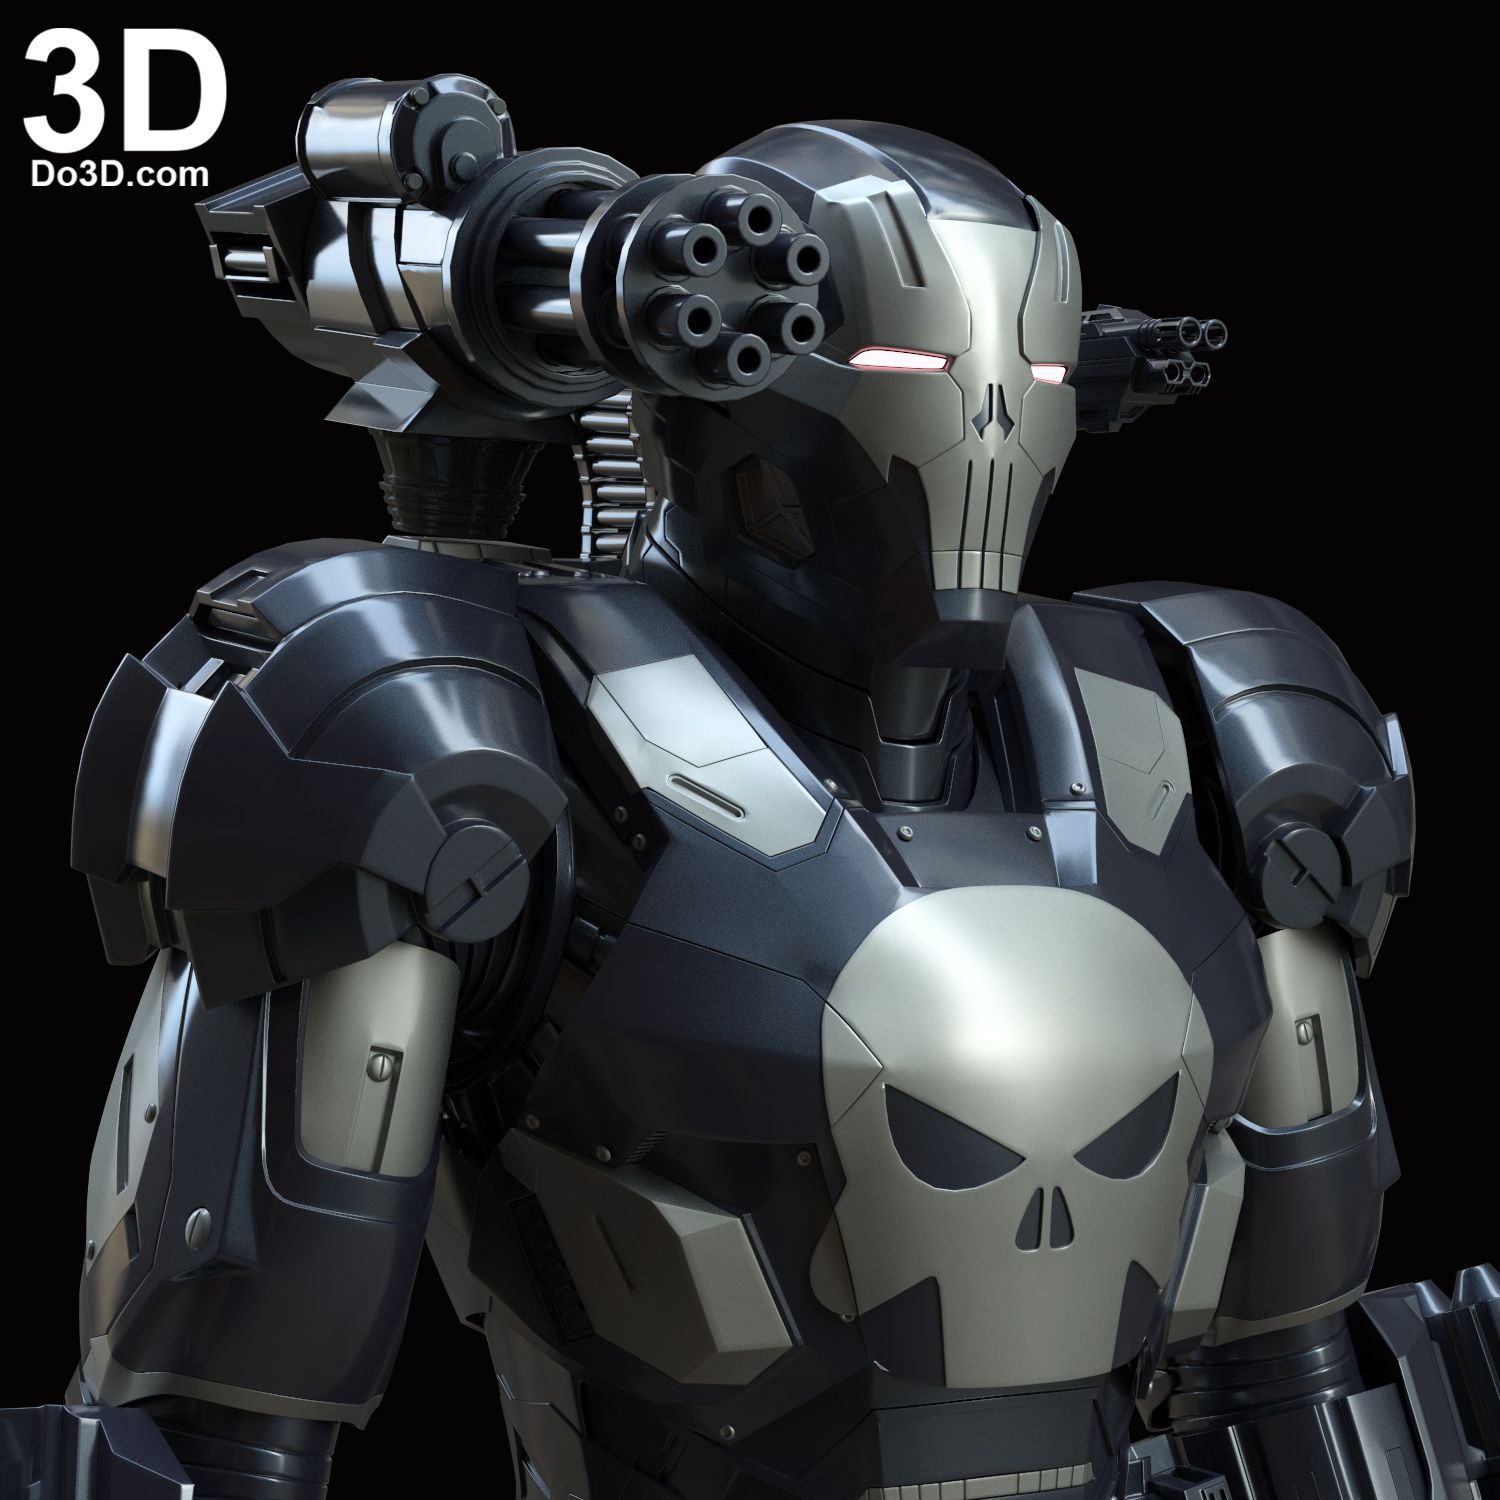 3D Printable Model: The Punisher War Machine Armor Suit. Print File Format: STL